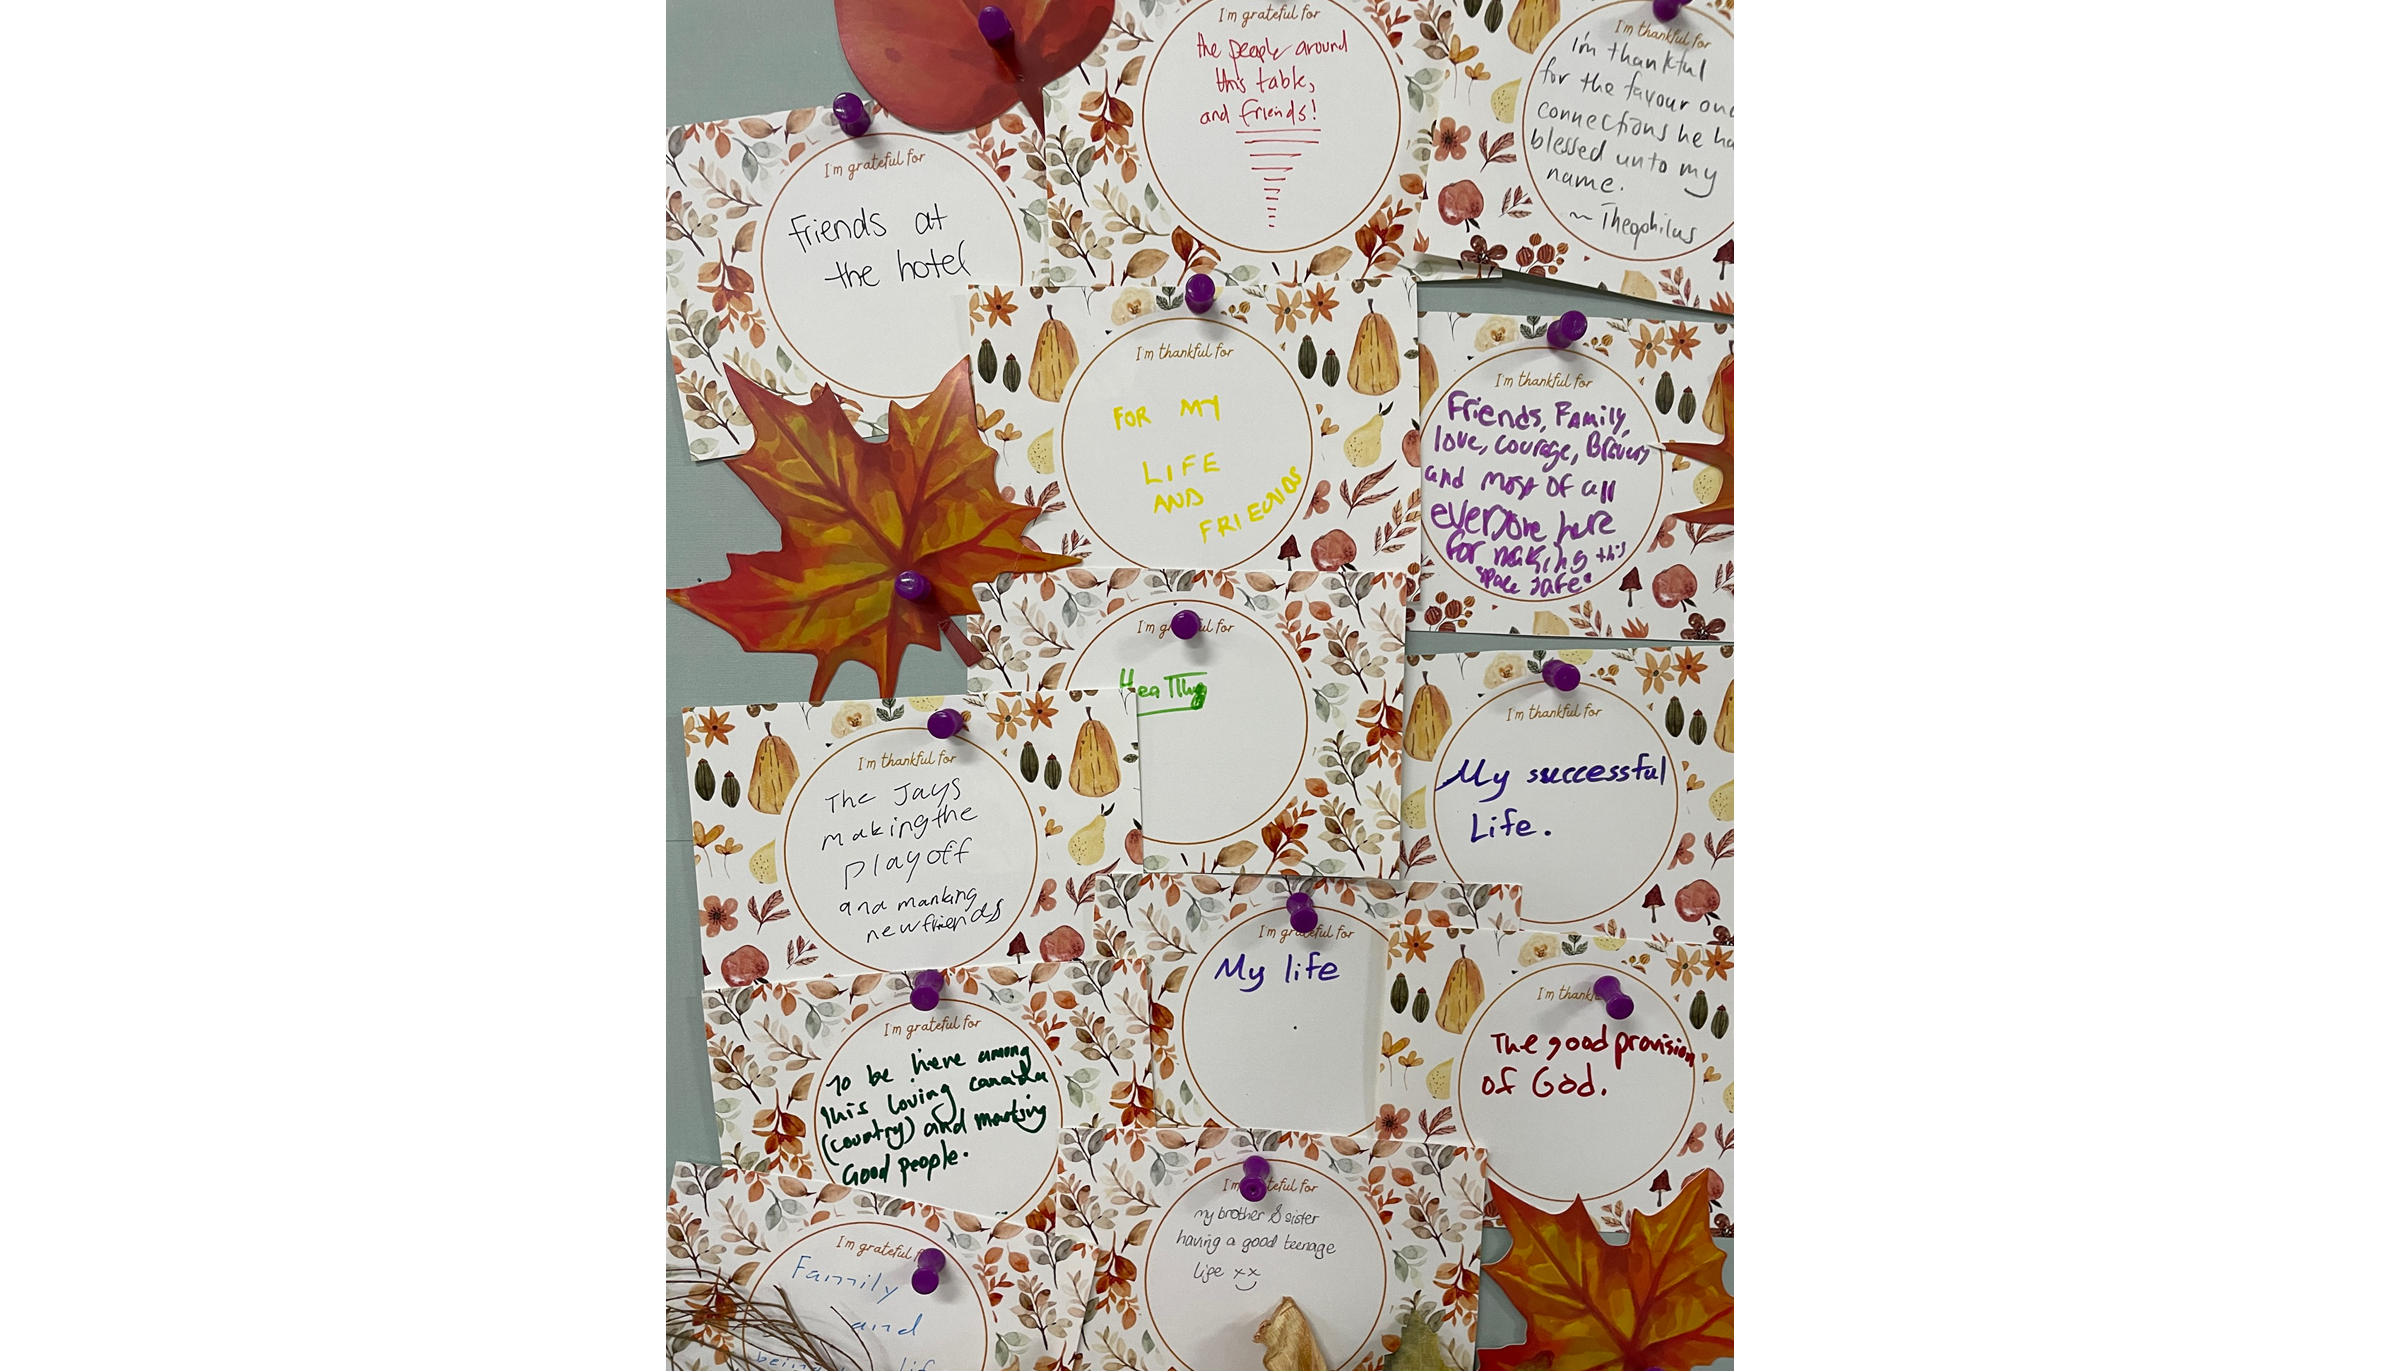 Handwritten notes of thanksgivings